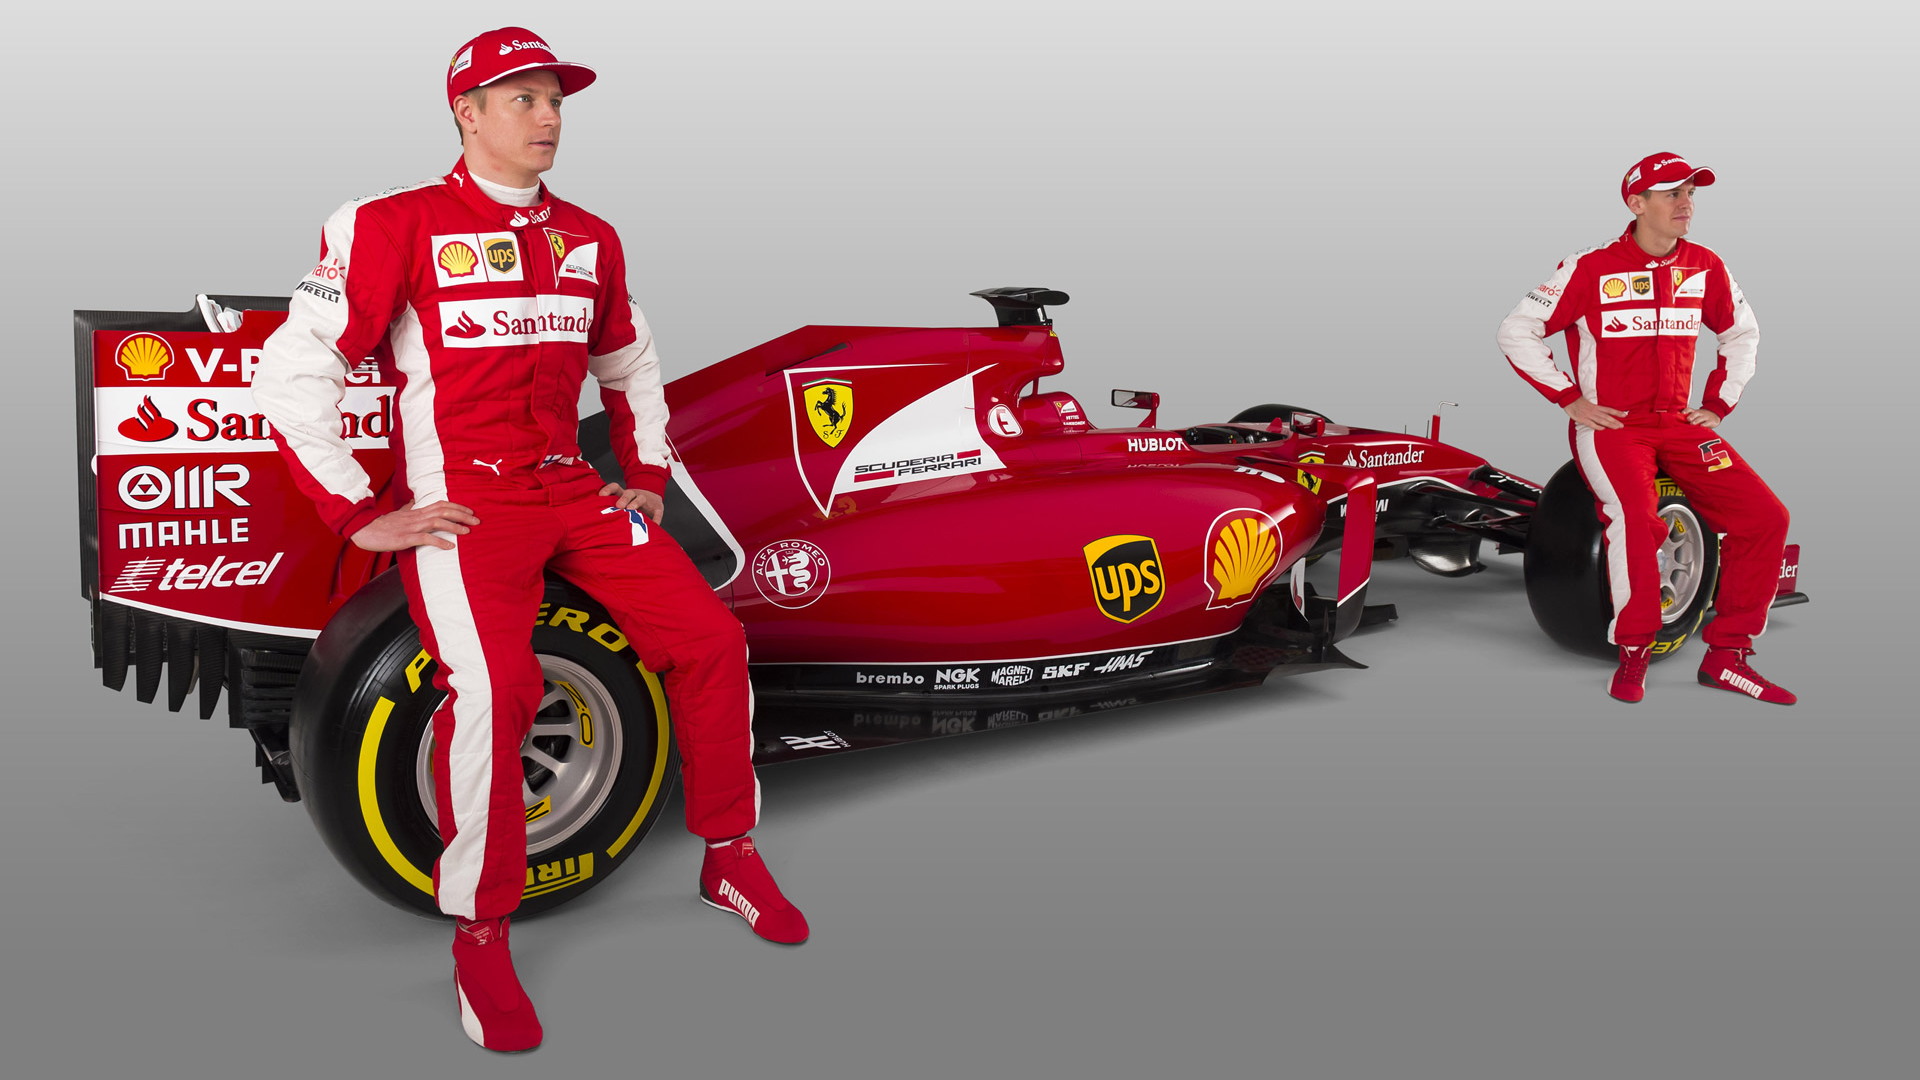 Ferrari SF15-T 2015 Formula One car